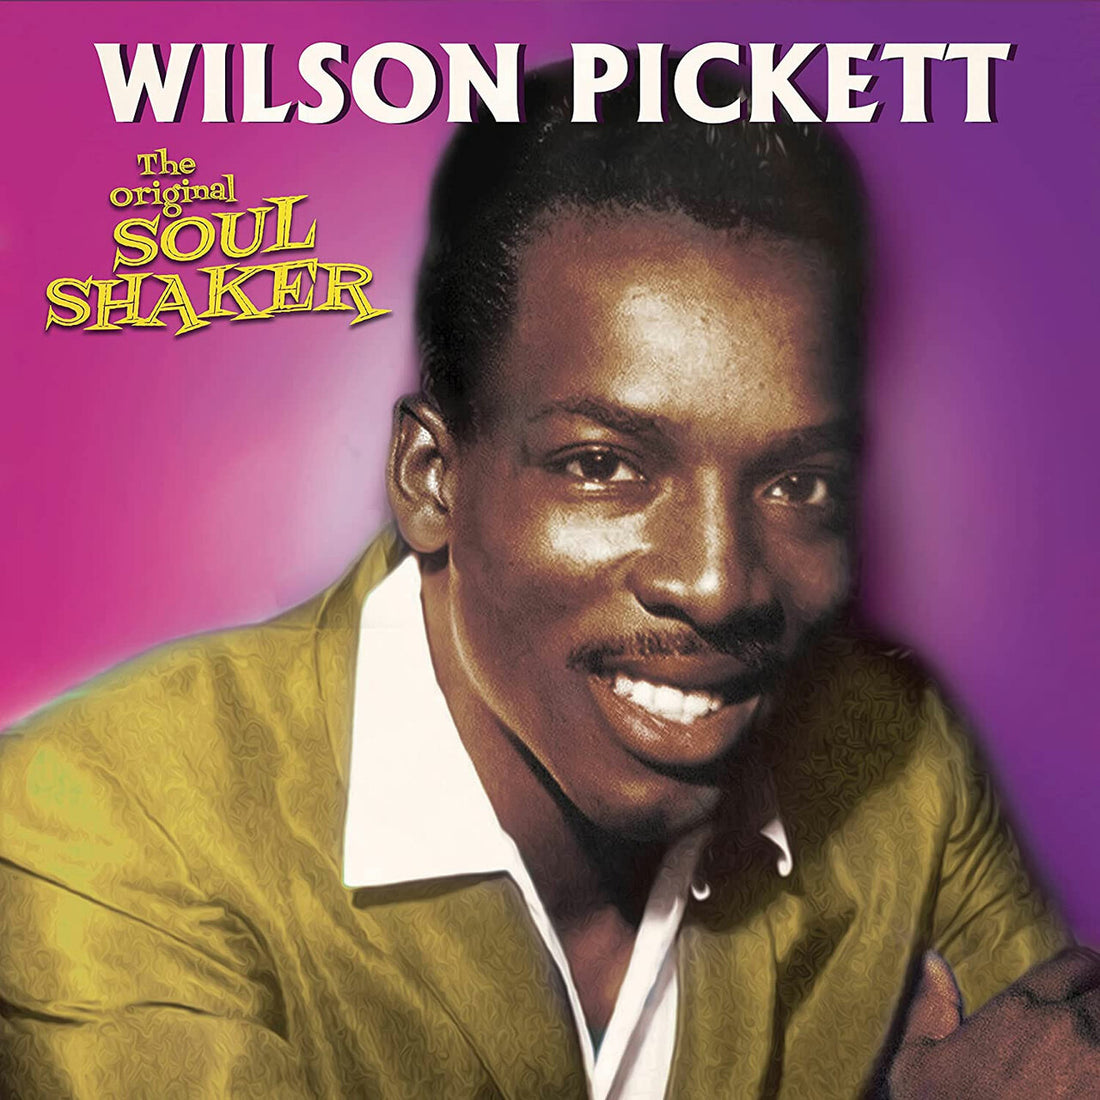 Wilson Pickett- The Original Soul Shaker